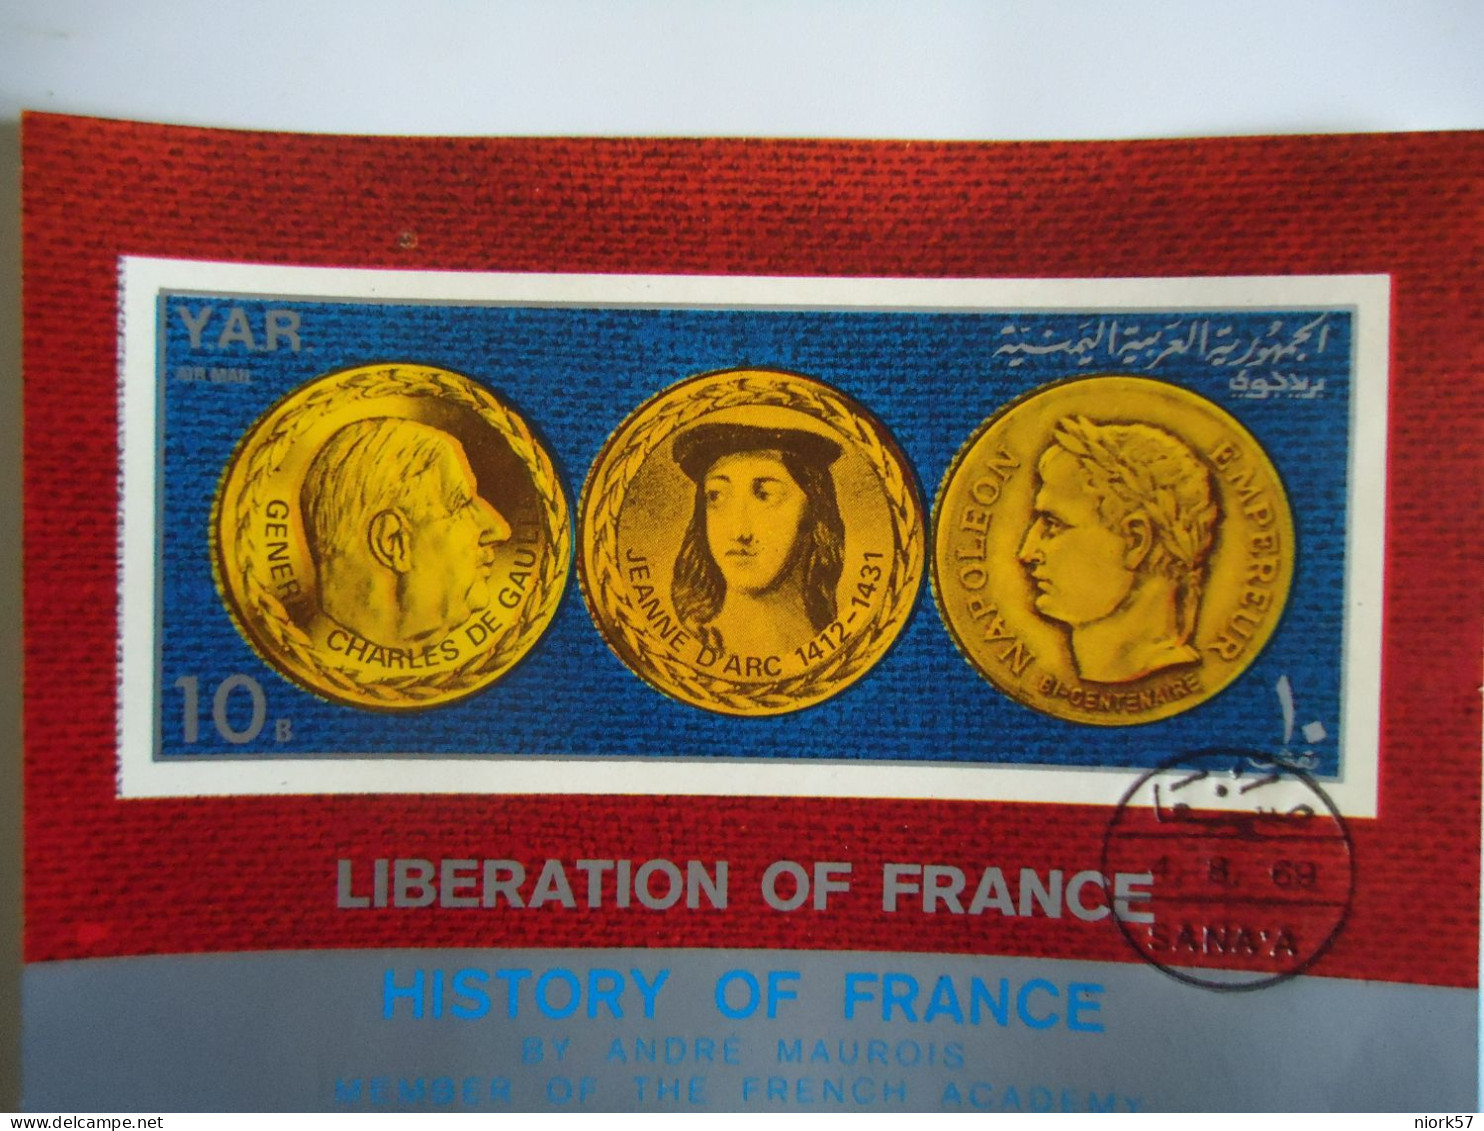 YEMEN  YAR  USED  SHEET HISTORY OF FRANCE COINS - French Revolution